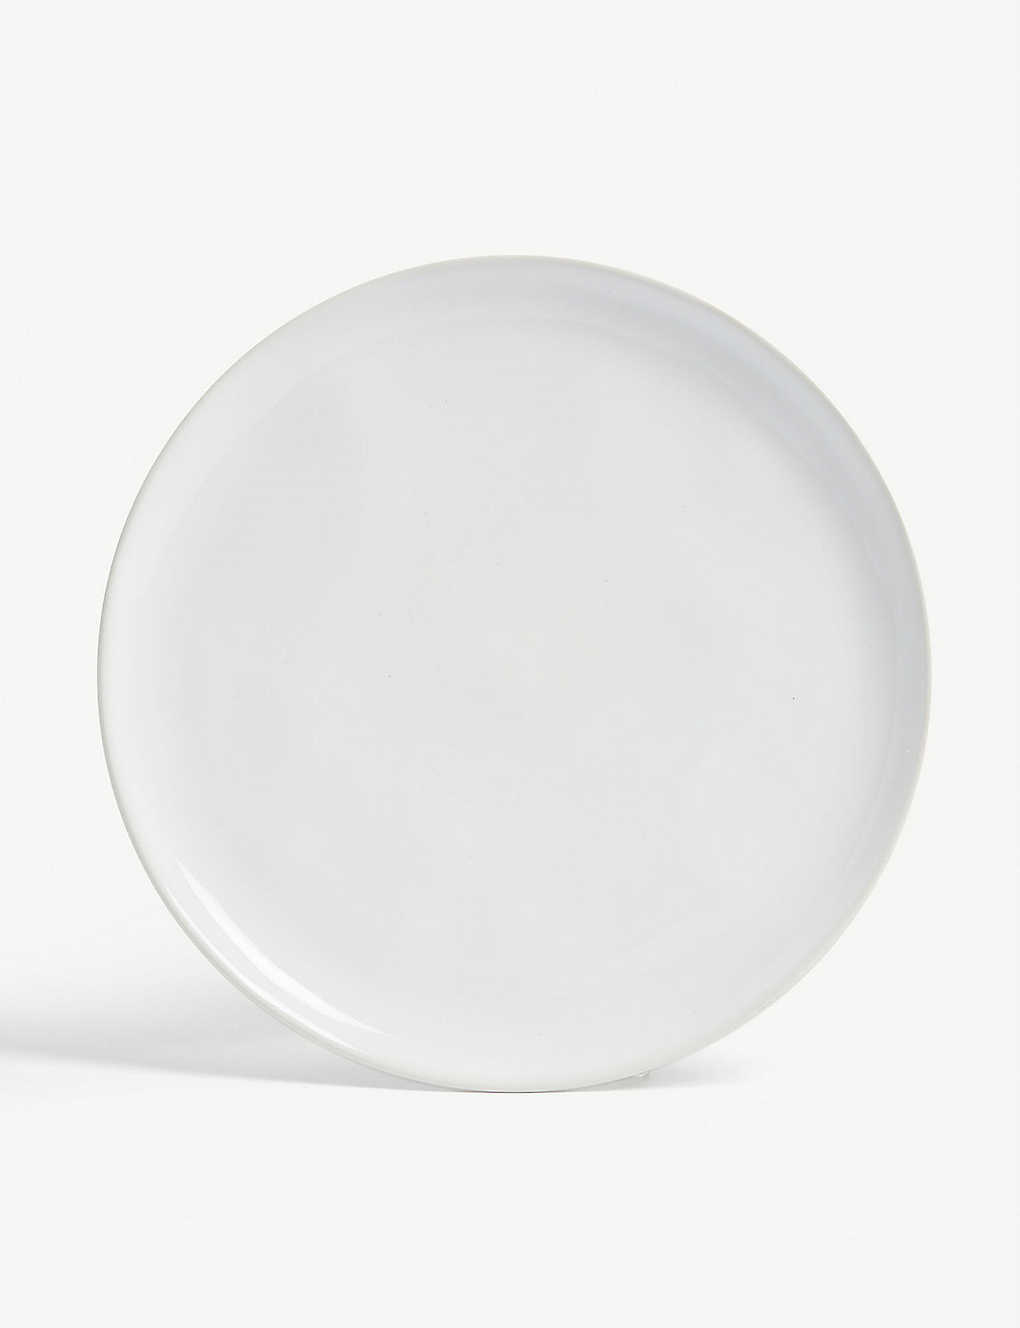 THE WHITE COMPANY ポルトベッロ サイド プレート Portobello side plate #White